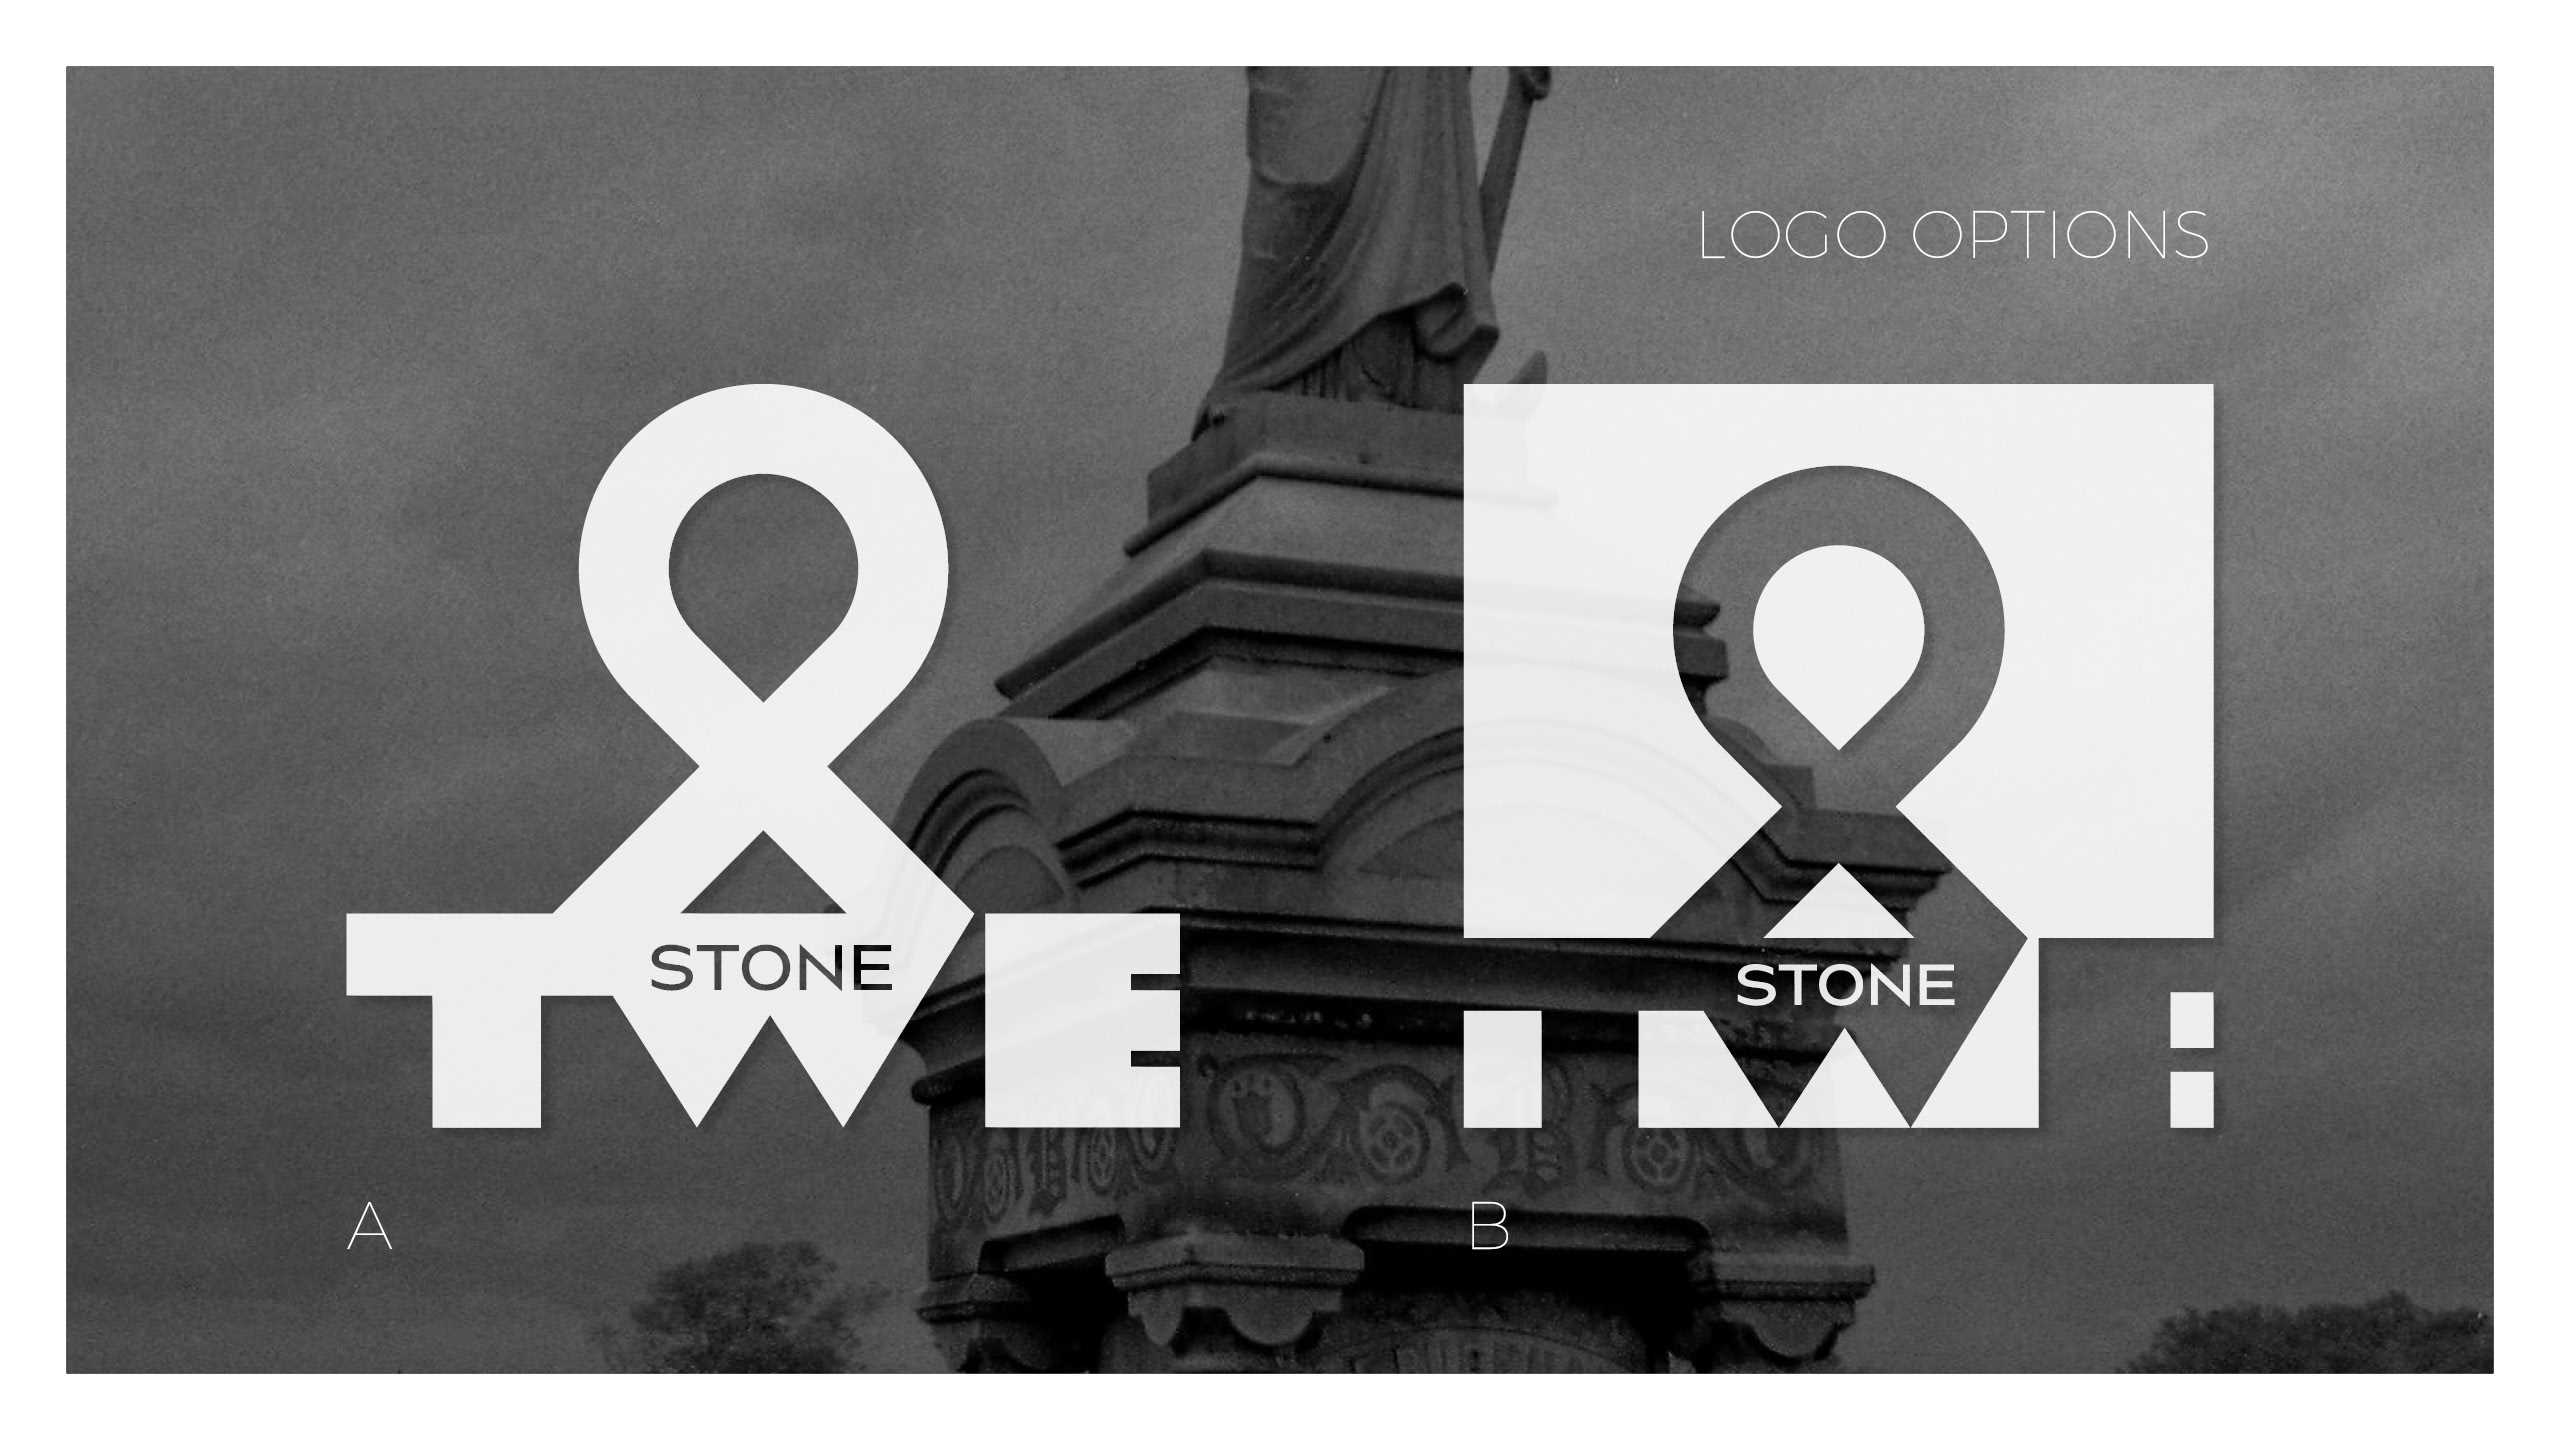 TWE Stone Logobou Design 02